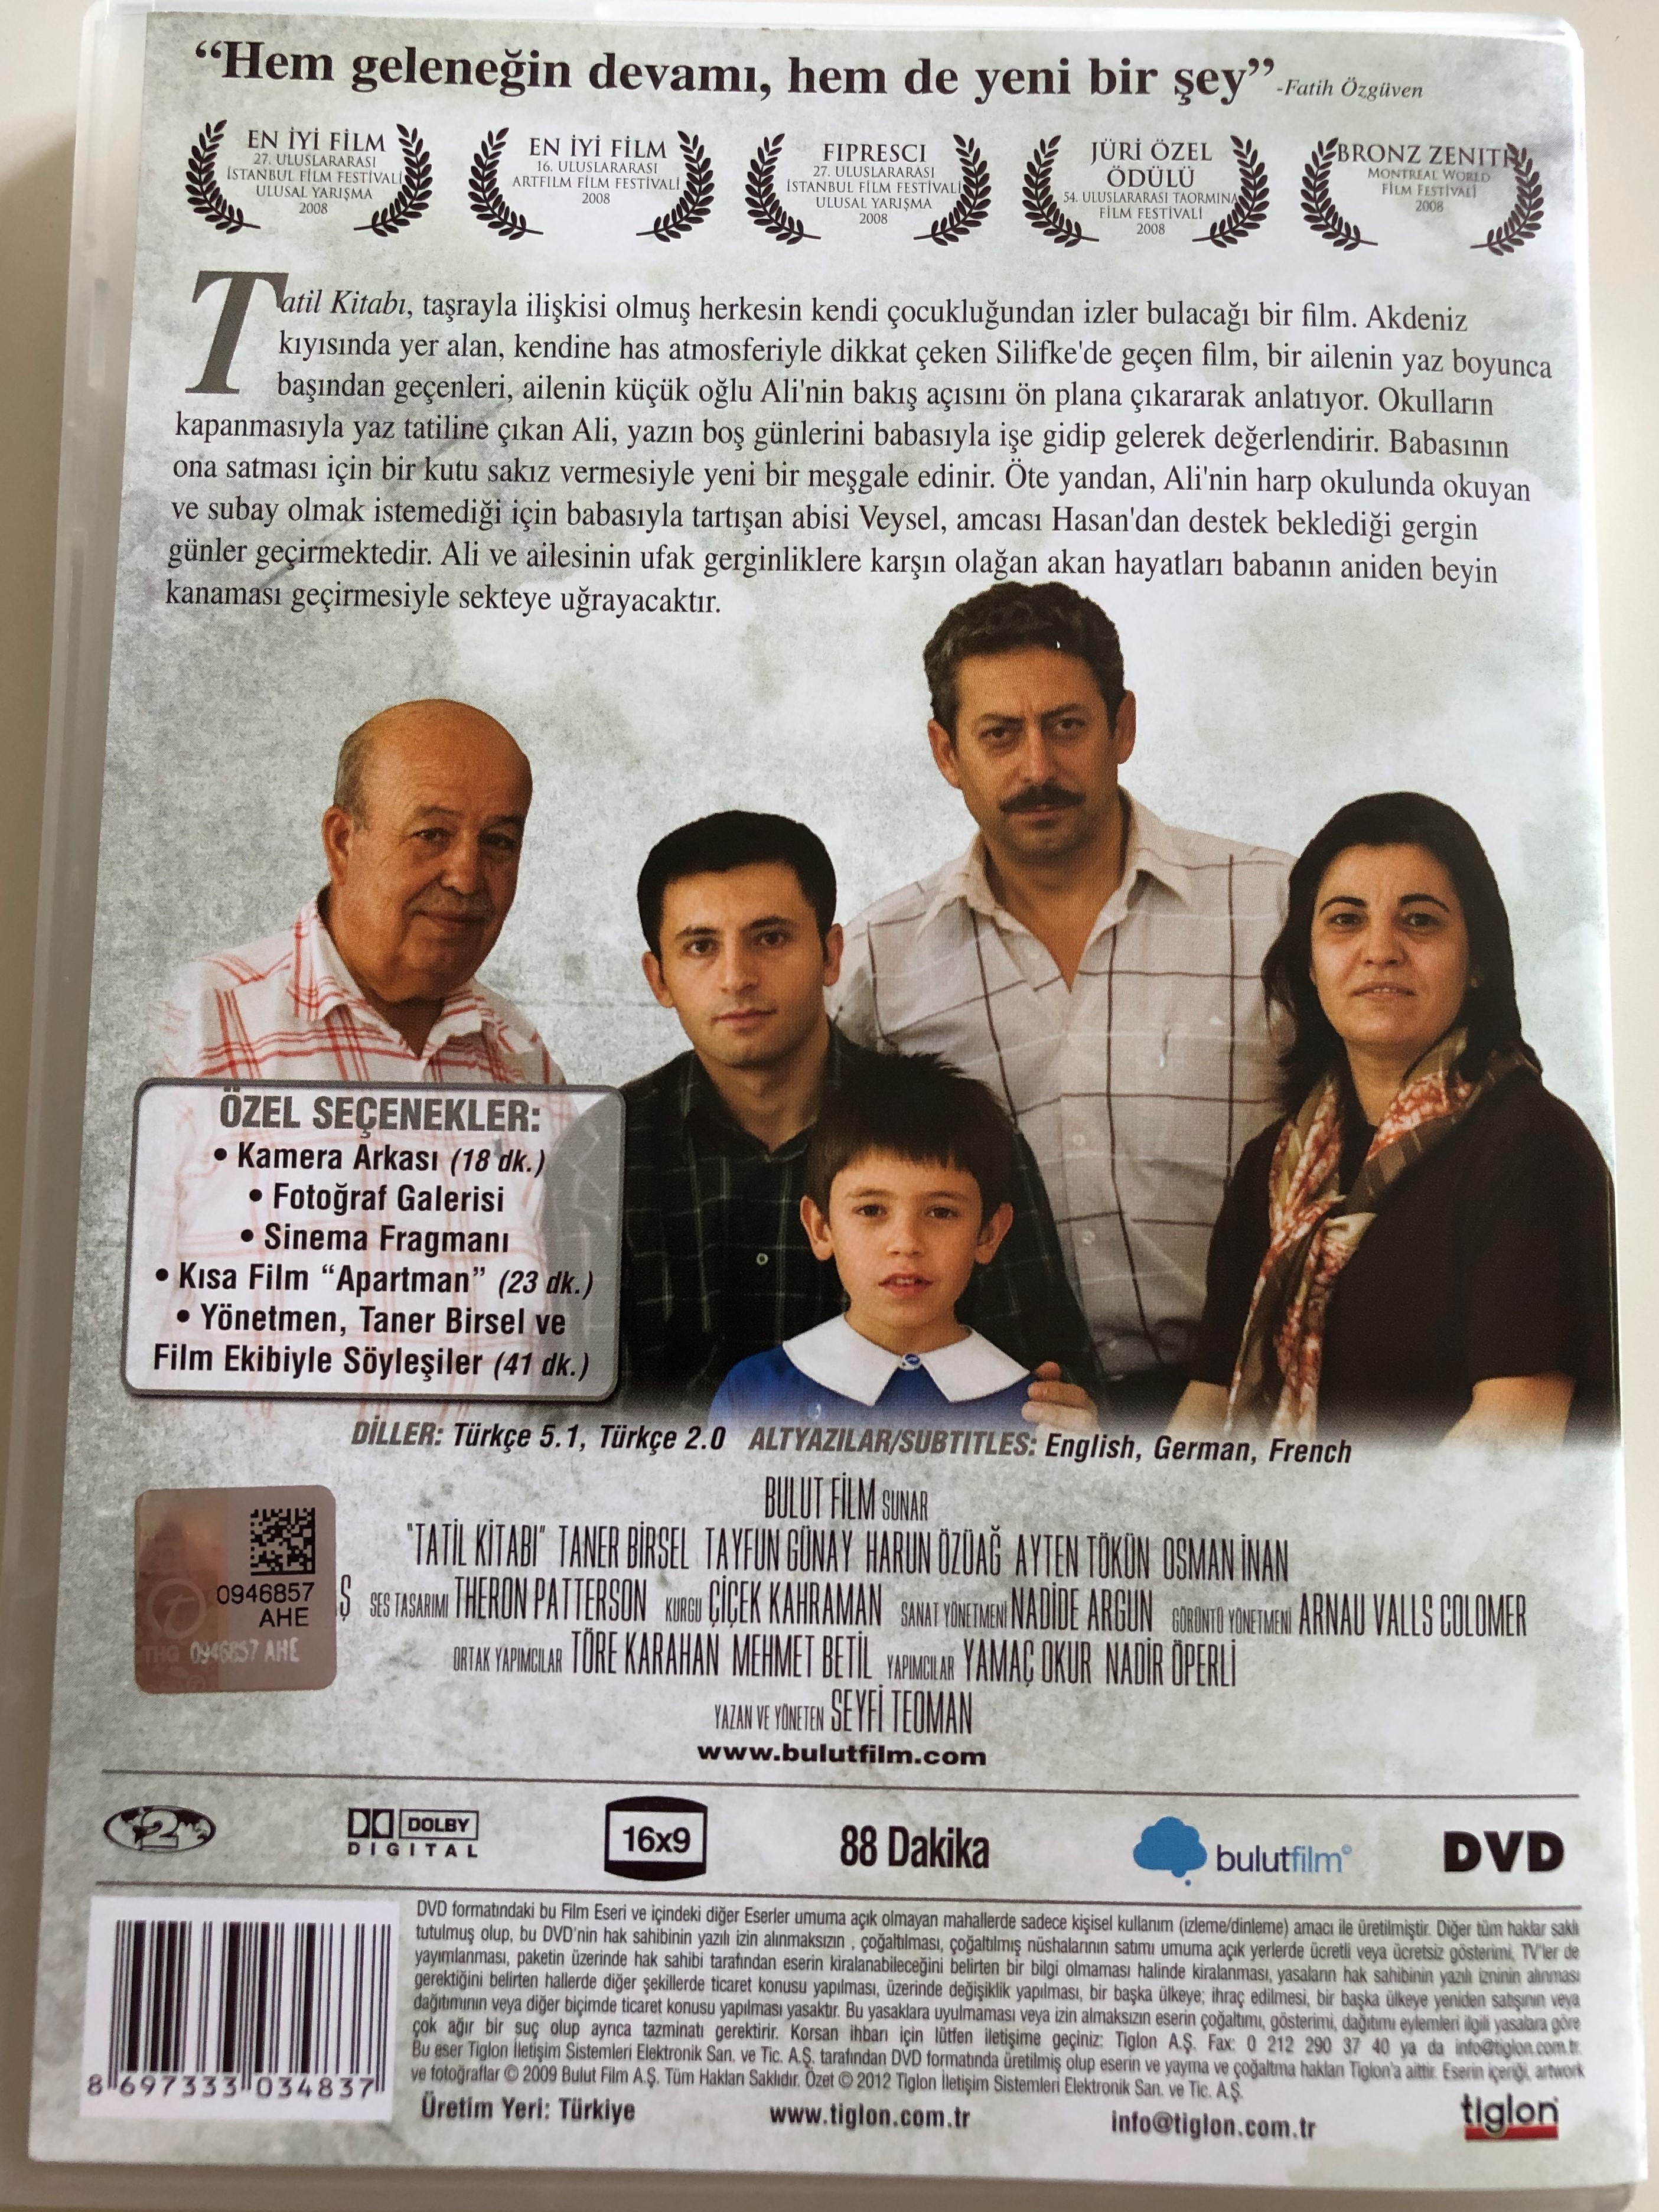 tatil-kitabi-dvd-2008-holiday-album-directed-by-seyfi-teoman-starring-taner-birsel-tayfun-gunay-harun-ozuag-ayten-tokun-osman-inan-turkish-film-2-.jpg